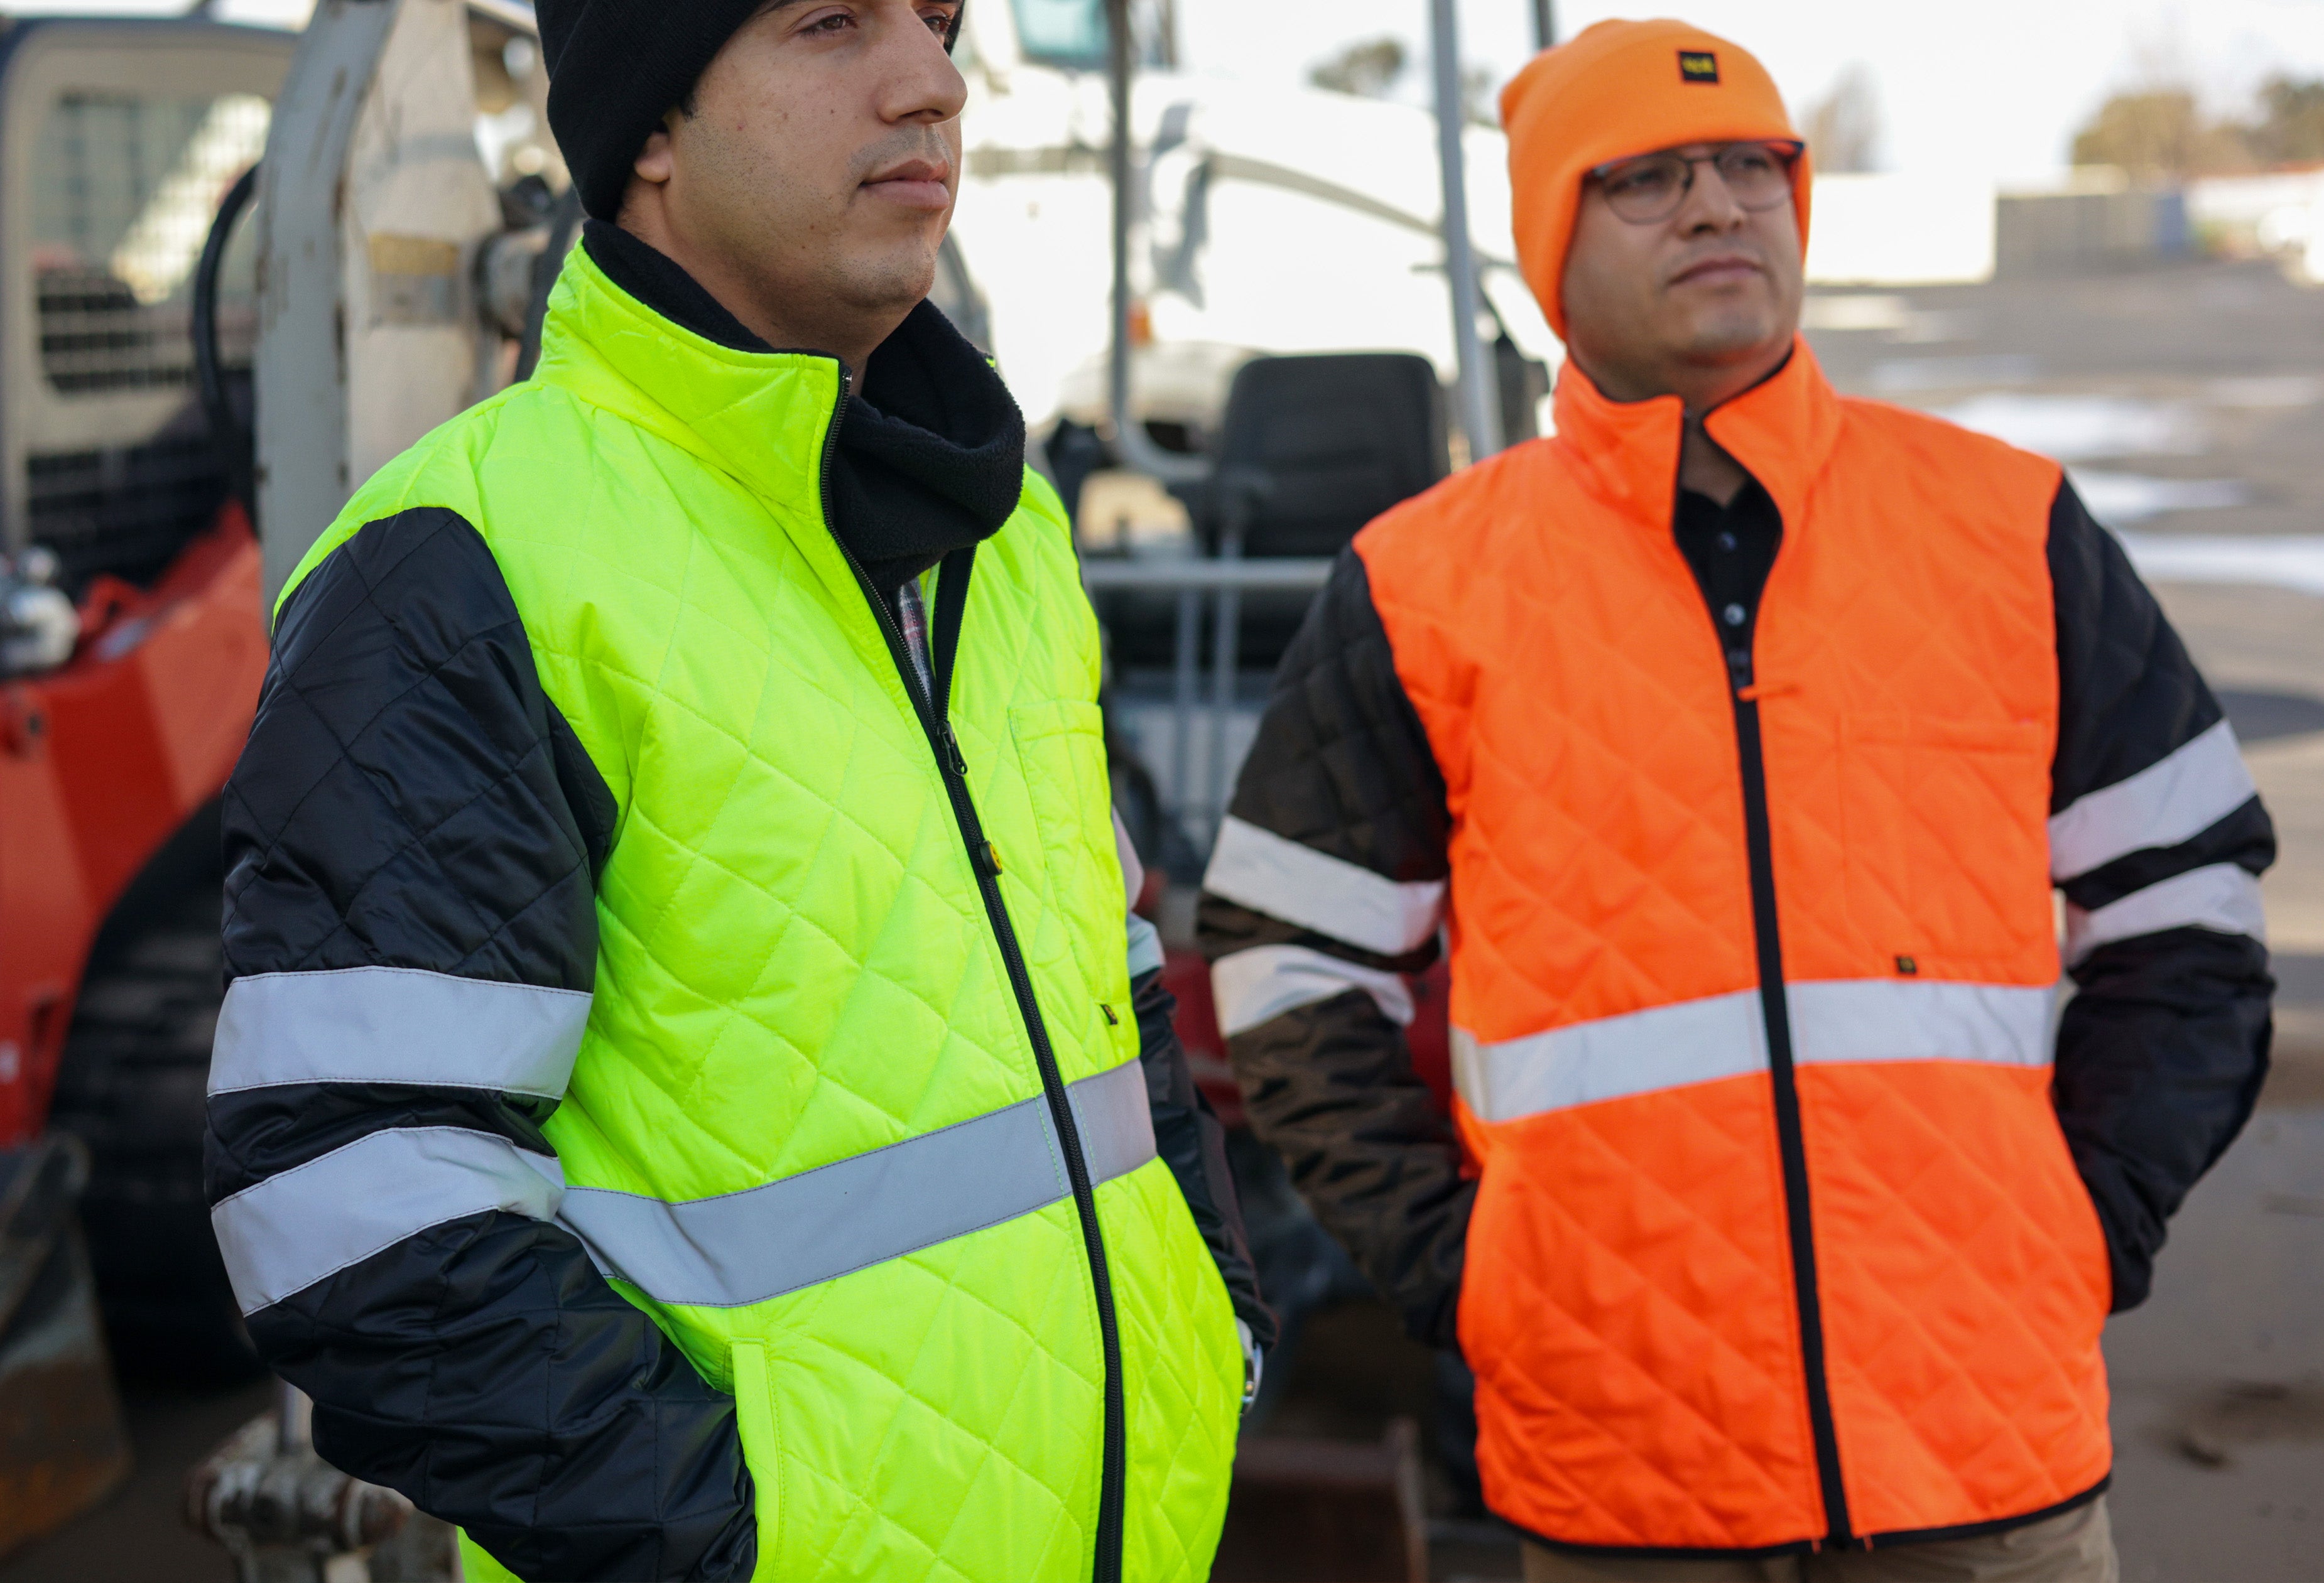 Agile Jacket - Quilted Hi Vis Orange Outerwear – Epik Workwear